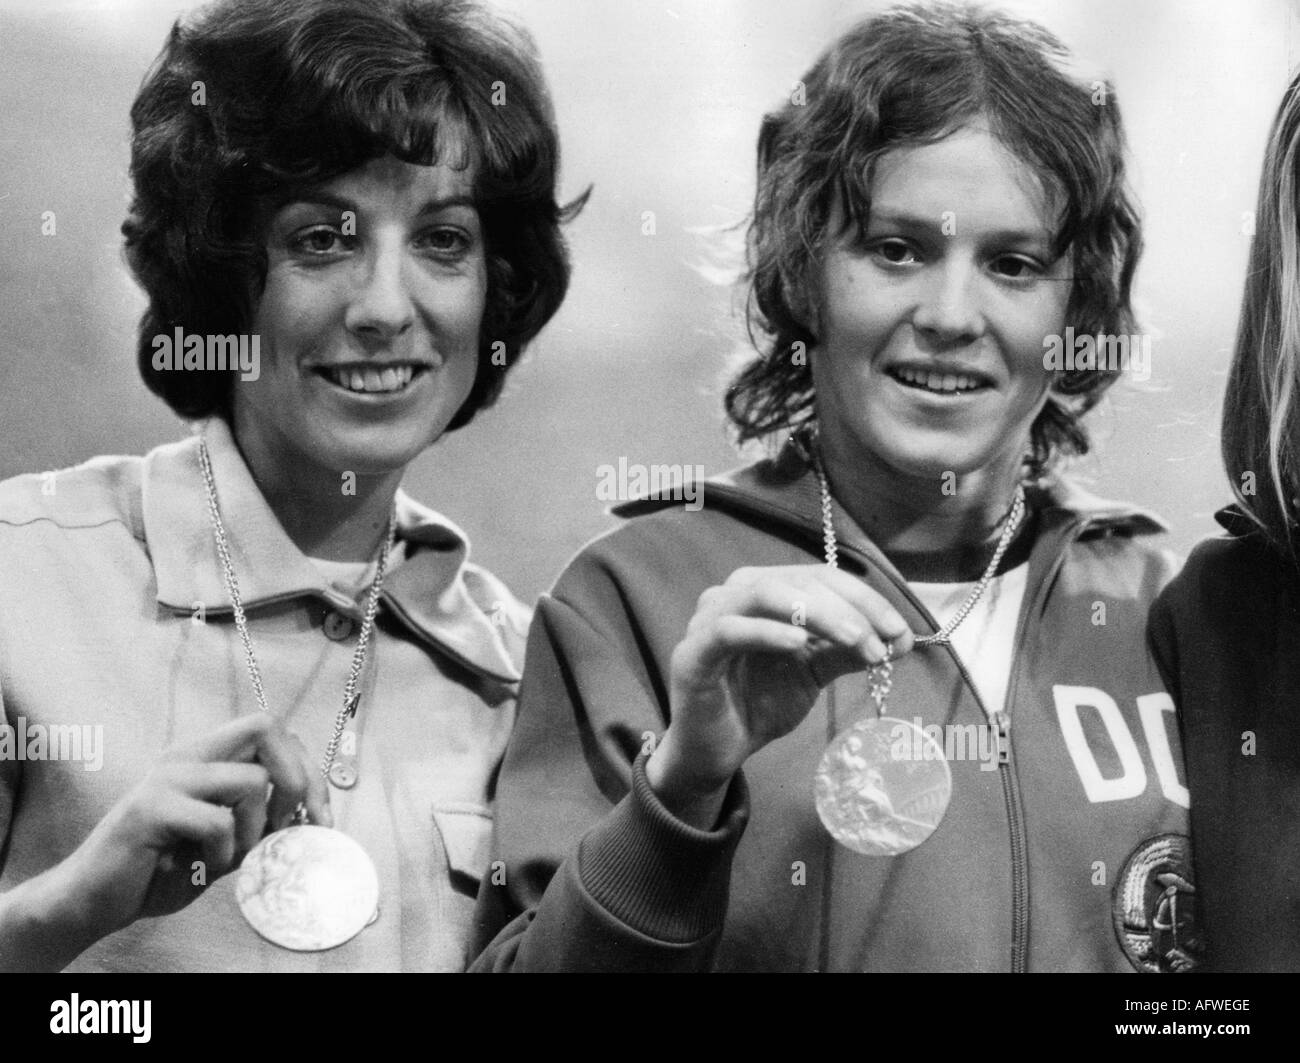 Zehrt, Monika, * 29.9.1952, German athlete (400 m), with Rita Wilden, 400 m relay, gold medal, Olympic Games, 1972, Munich, Stock Photo